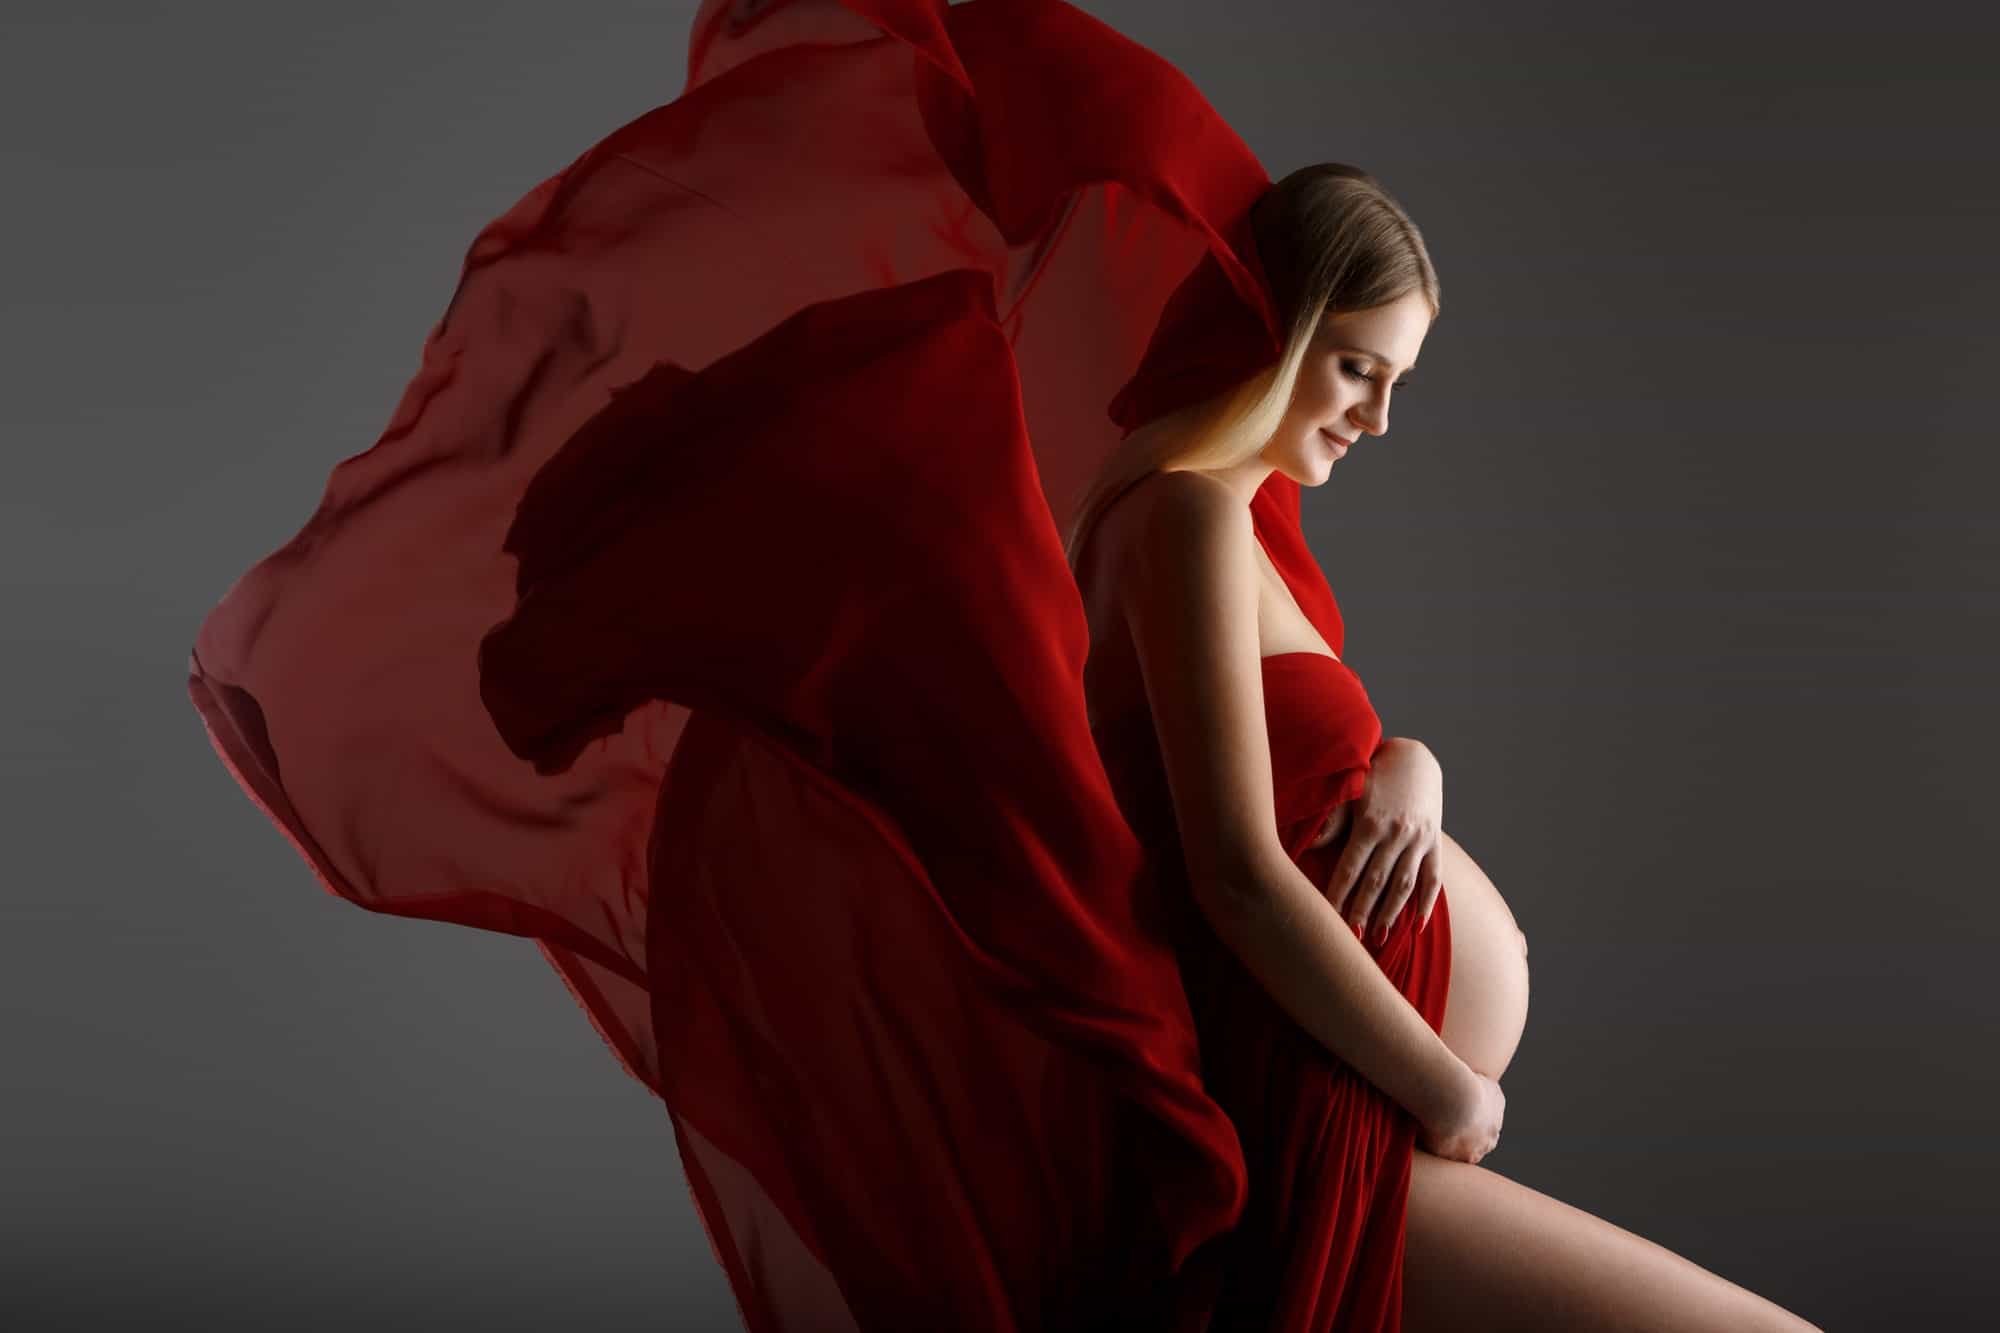 Maternity Shapewear: The Best Postpartum Girdle For You